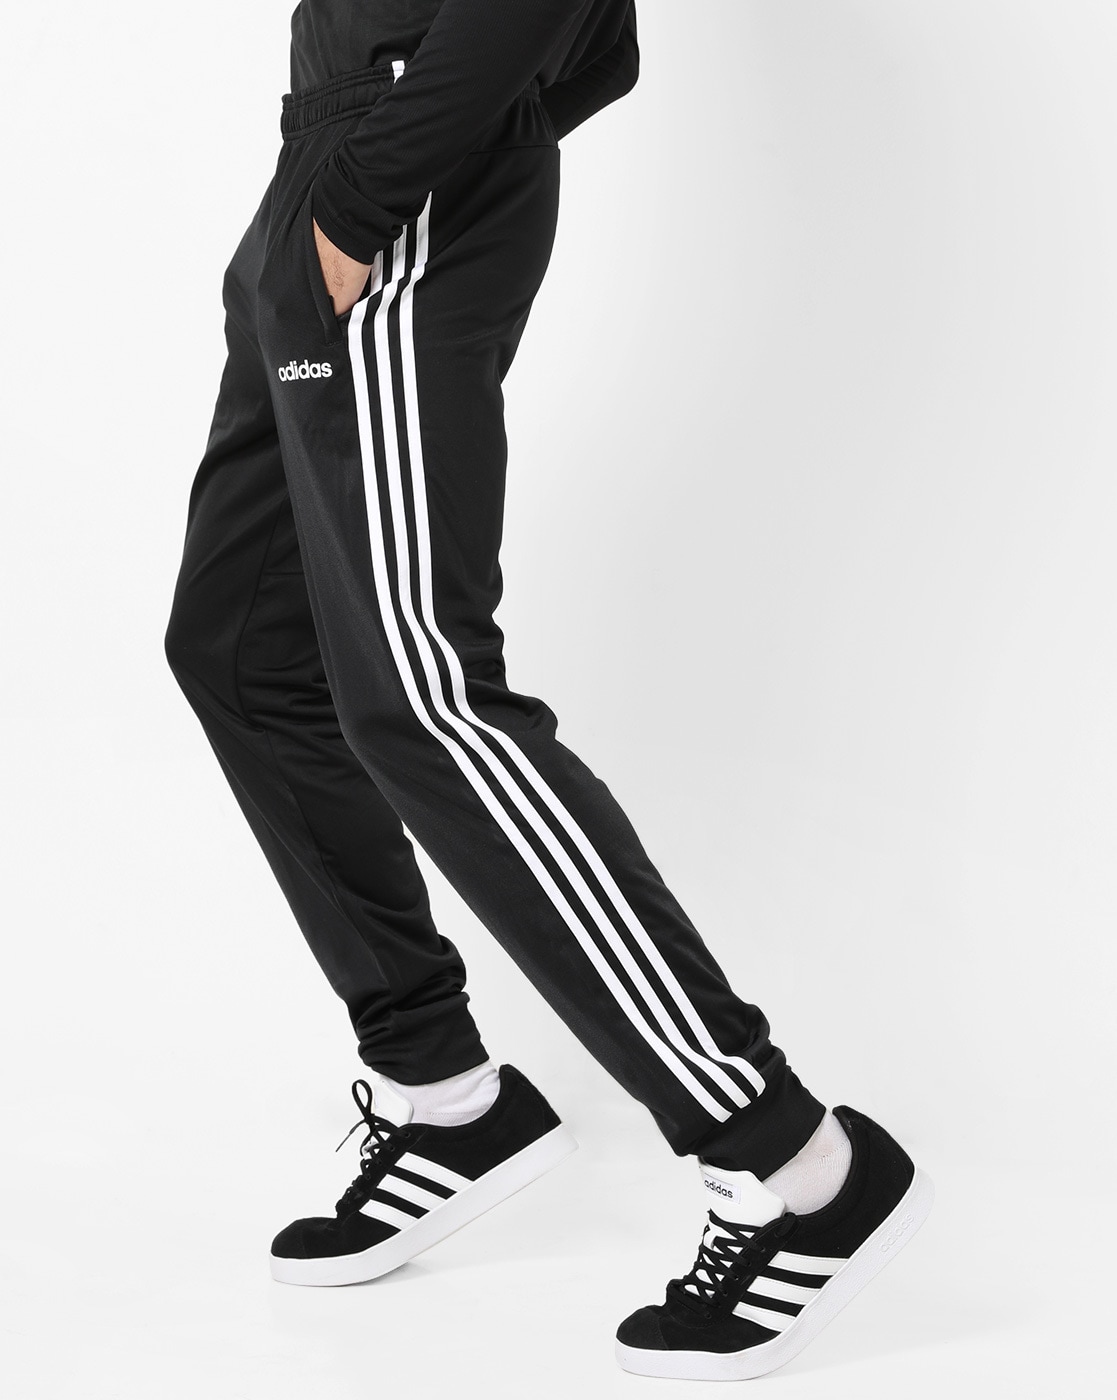 adidas 3Stripes Jogging Pants BlackWhite Small  Amazonin Fashion